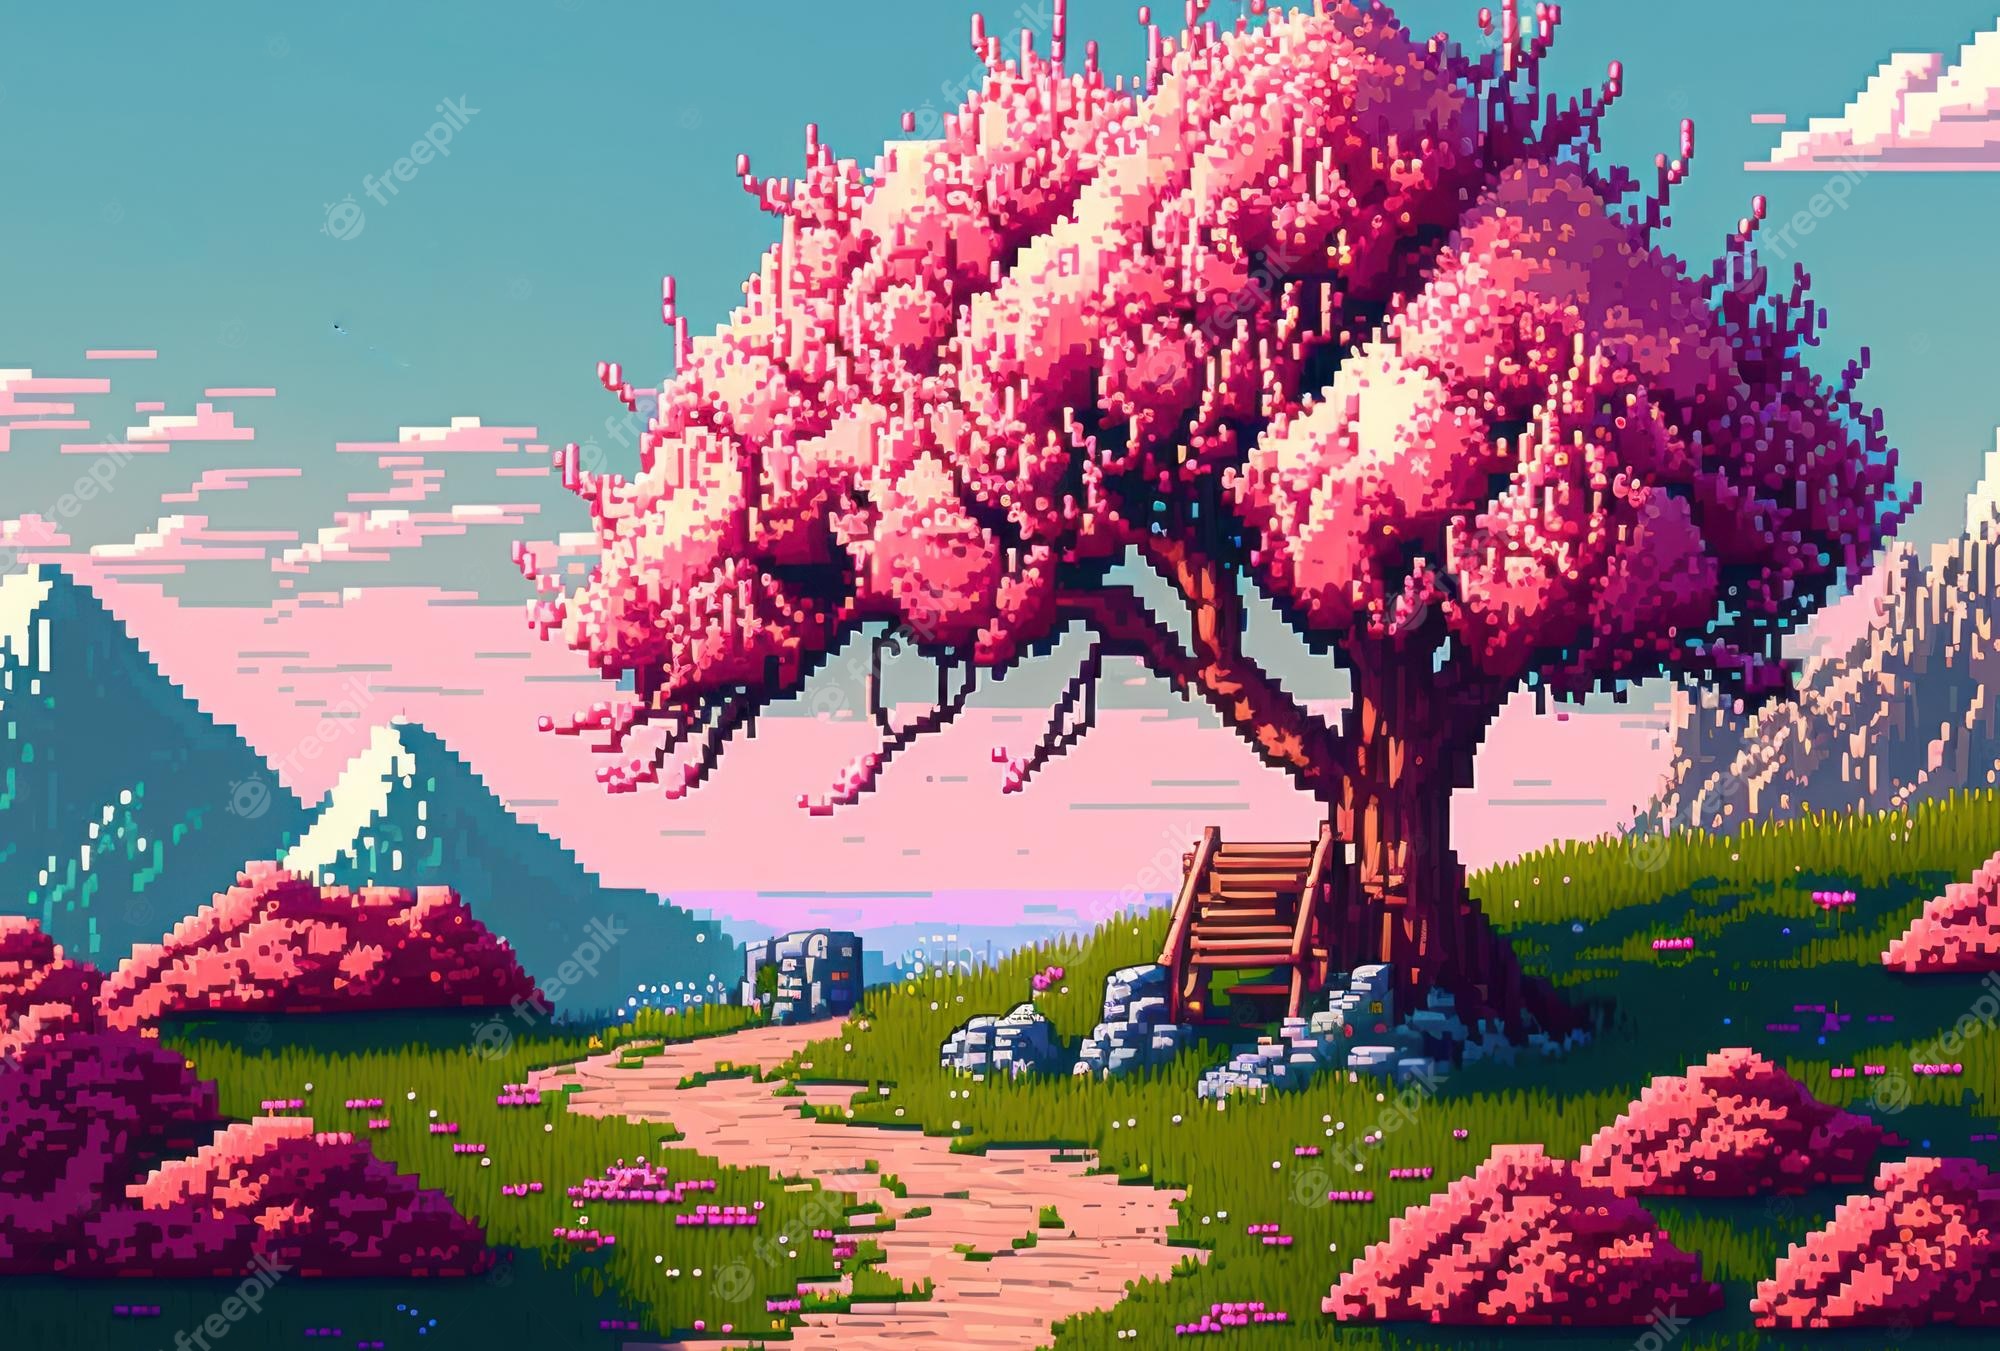 Premium Photo. Spring season cherry blossom tree with beautiful landscape background pixel art style